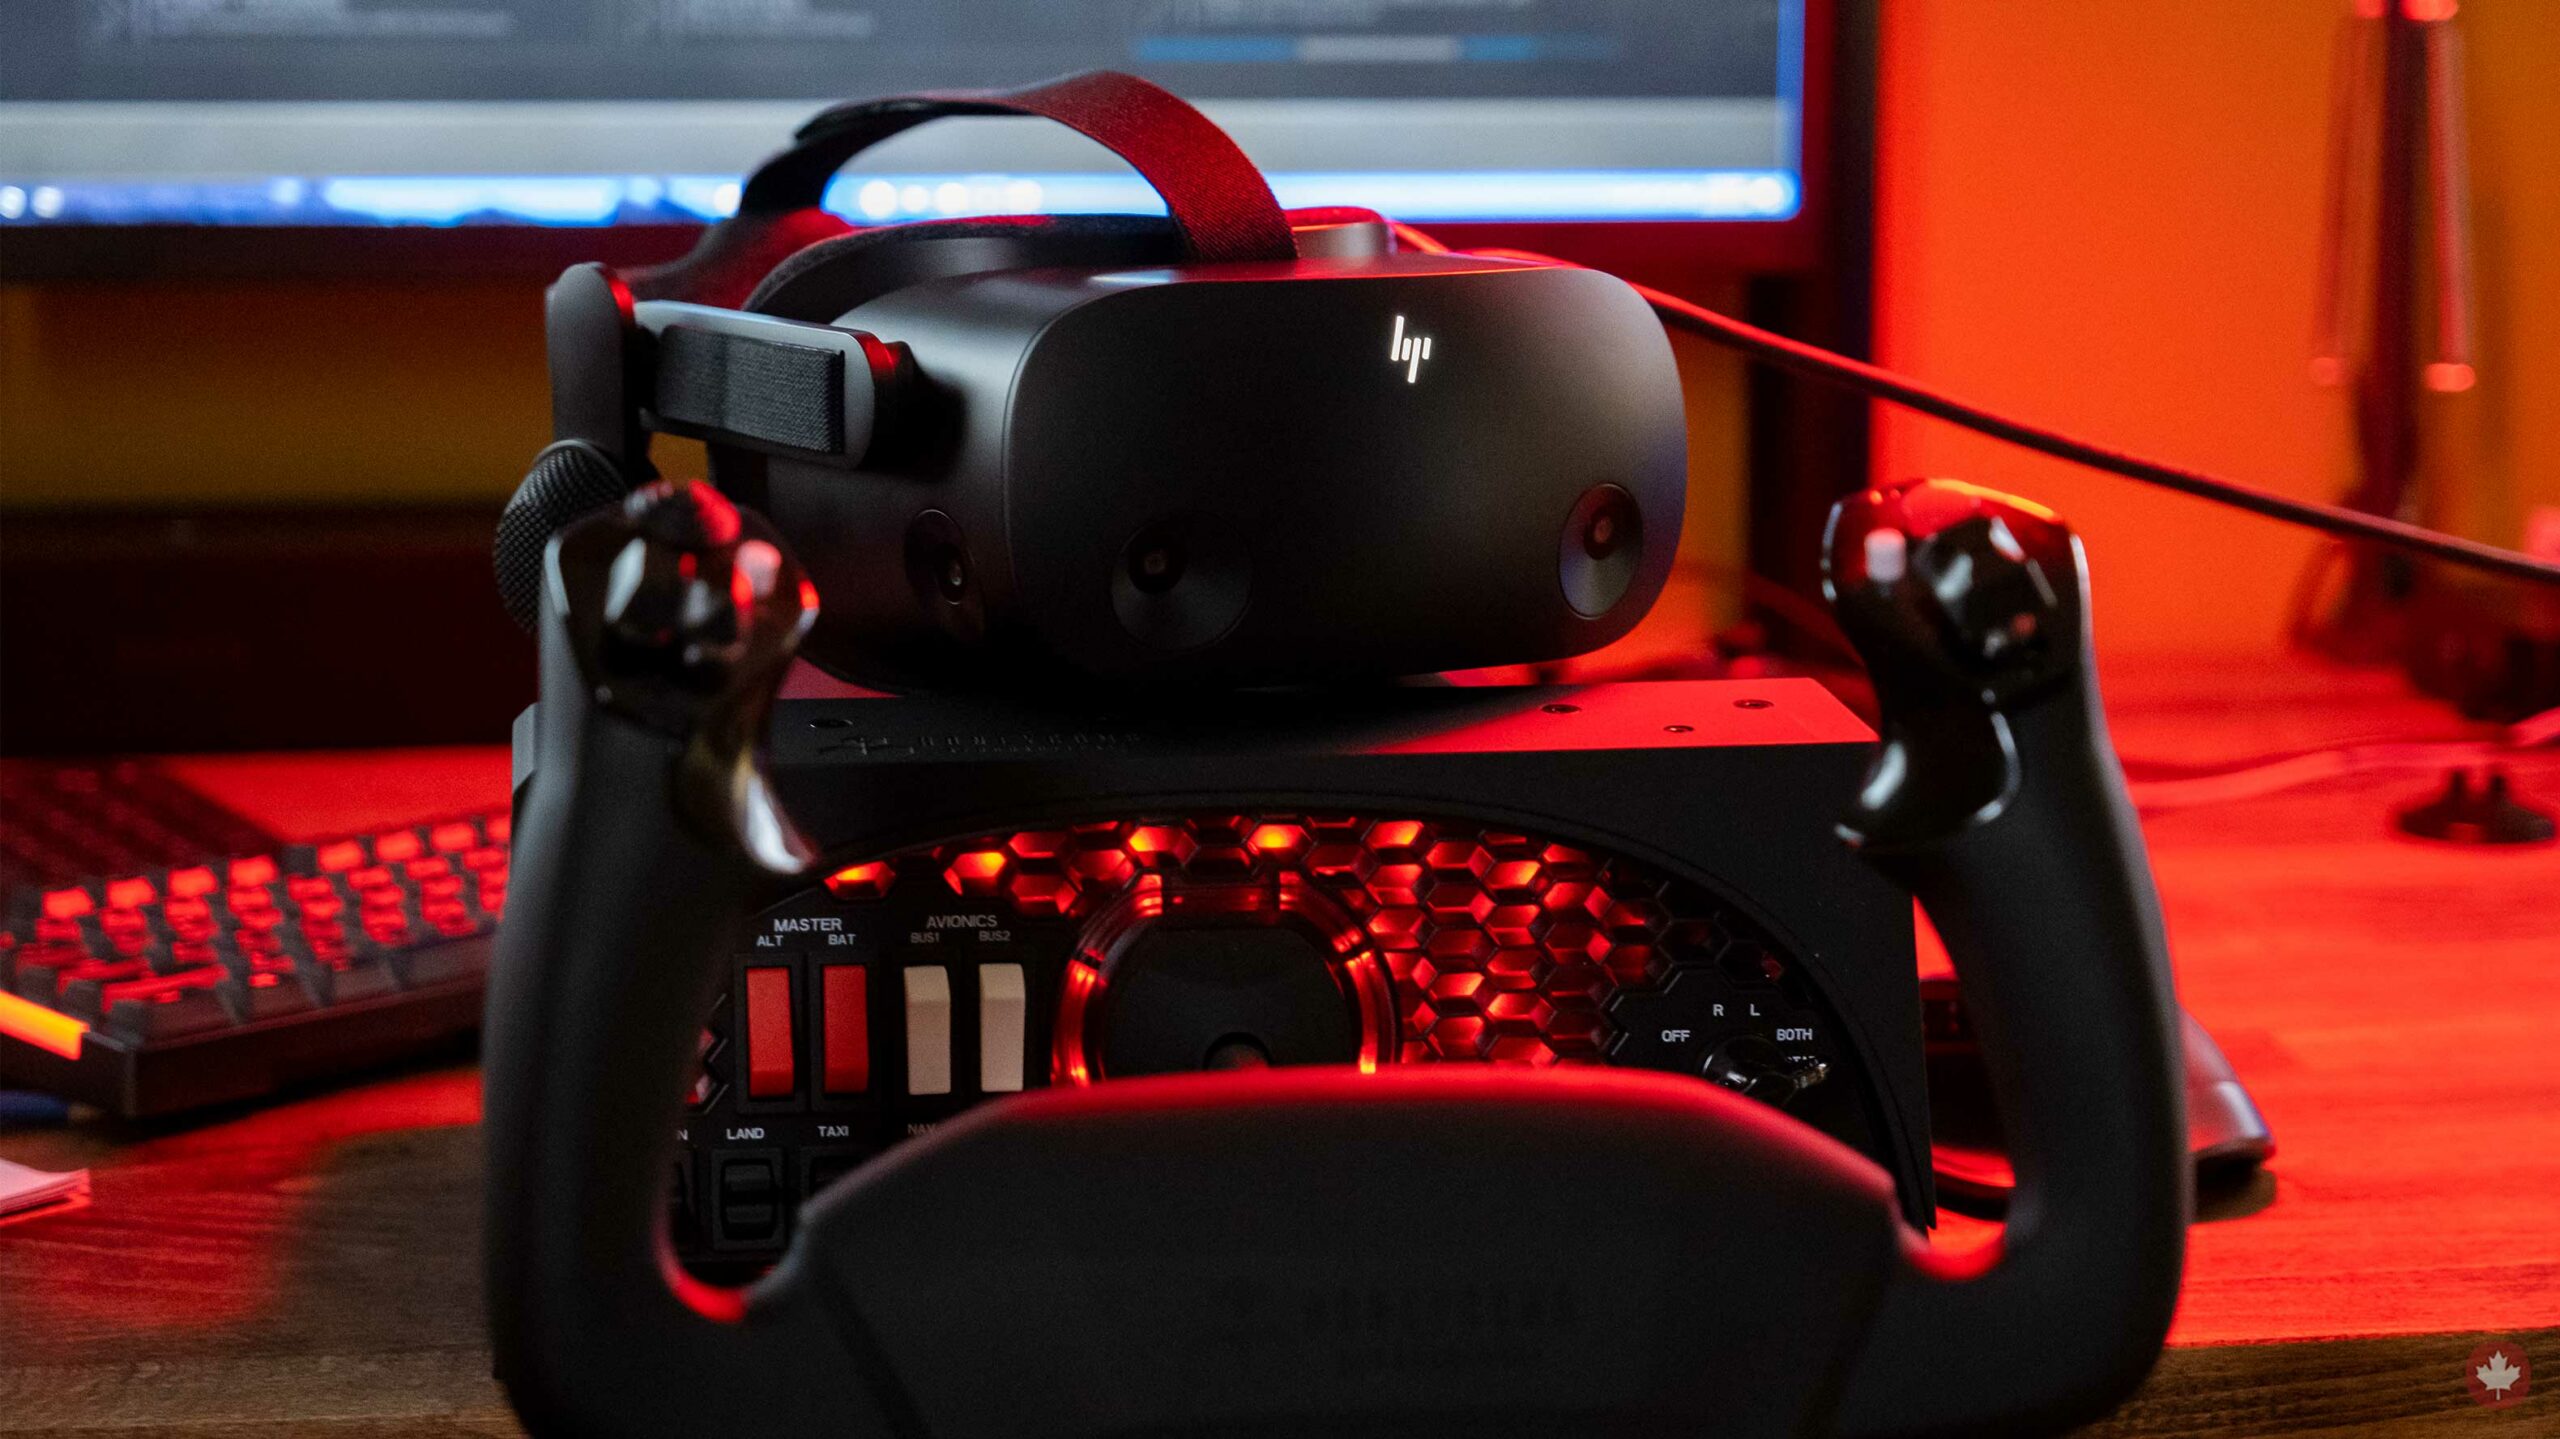 Microsoft Flight Simulator 2020: Now with VR! - Economy Class & Beyond